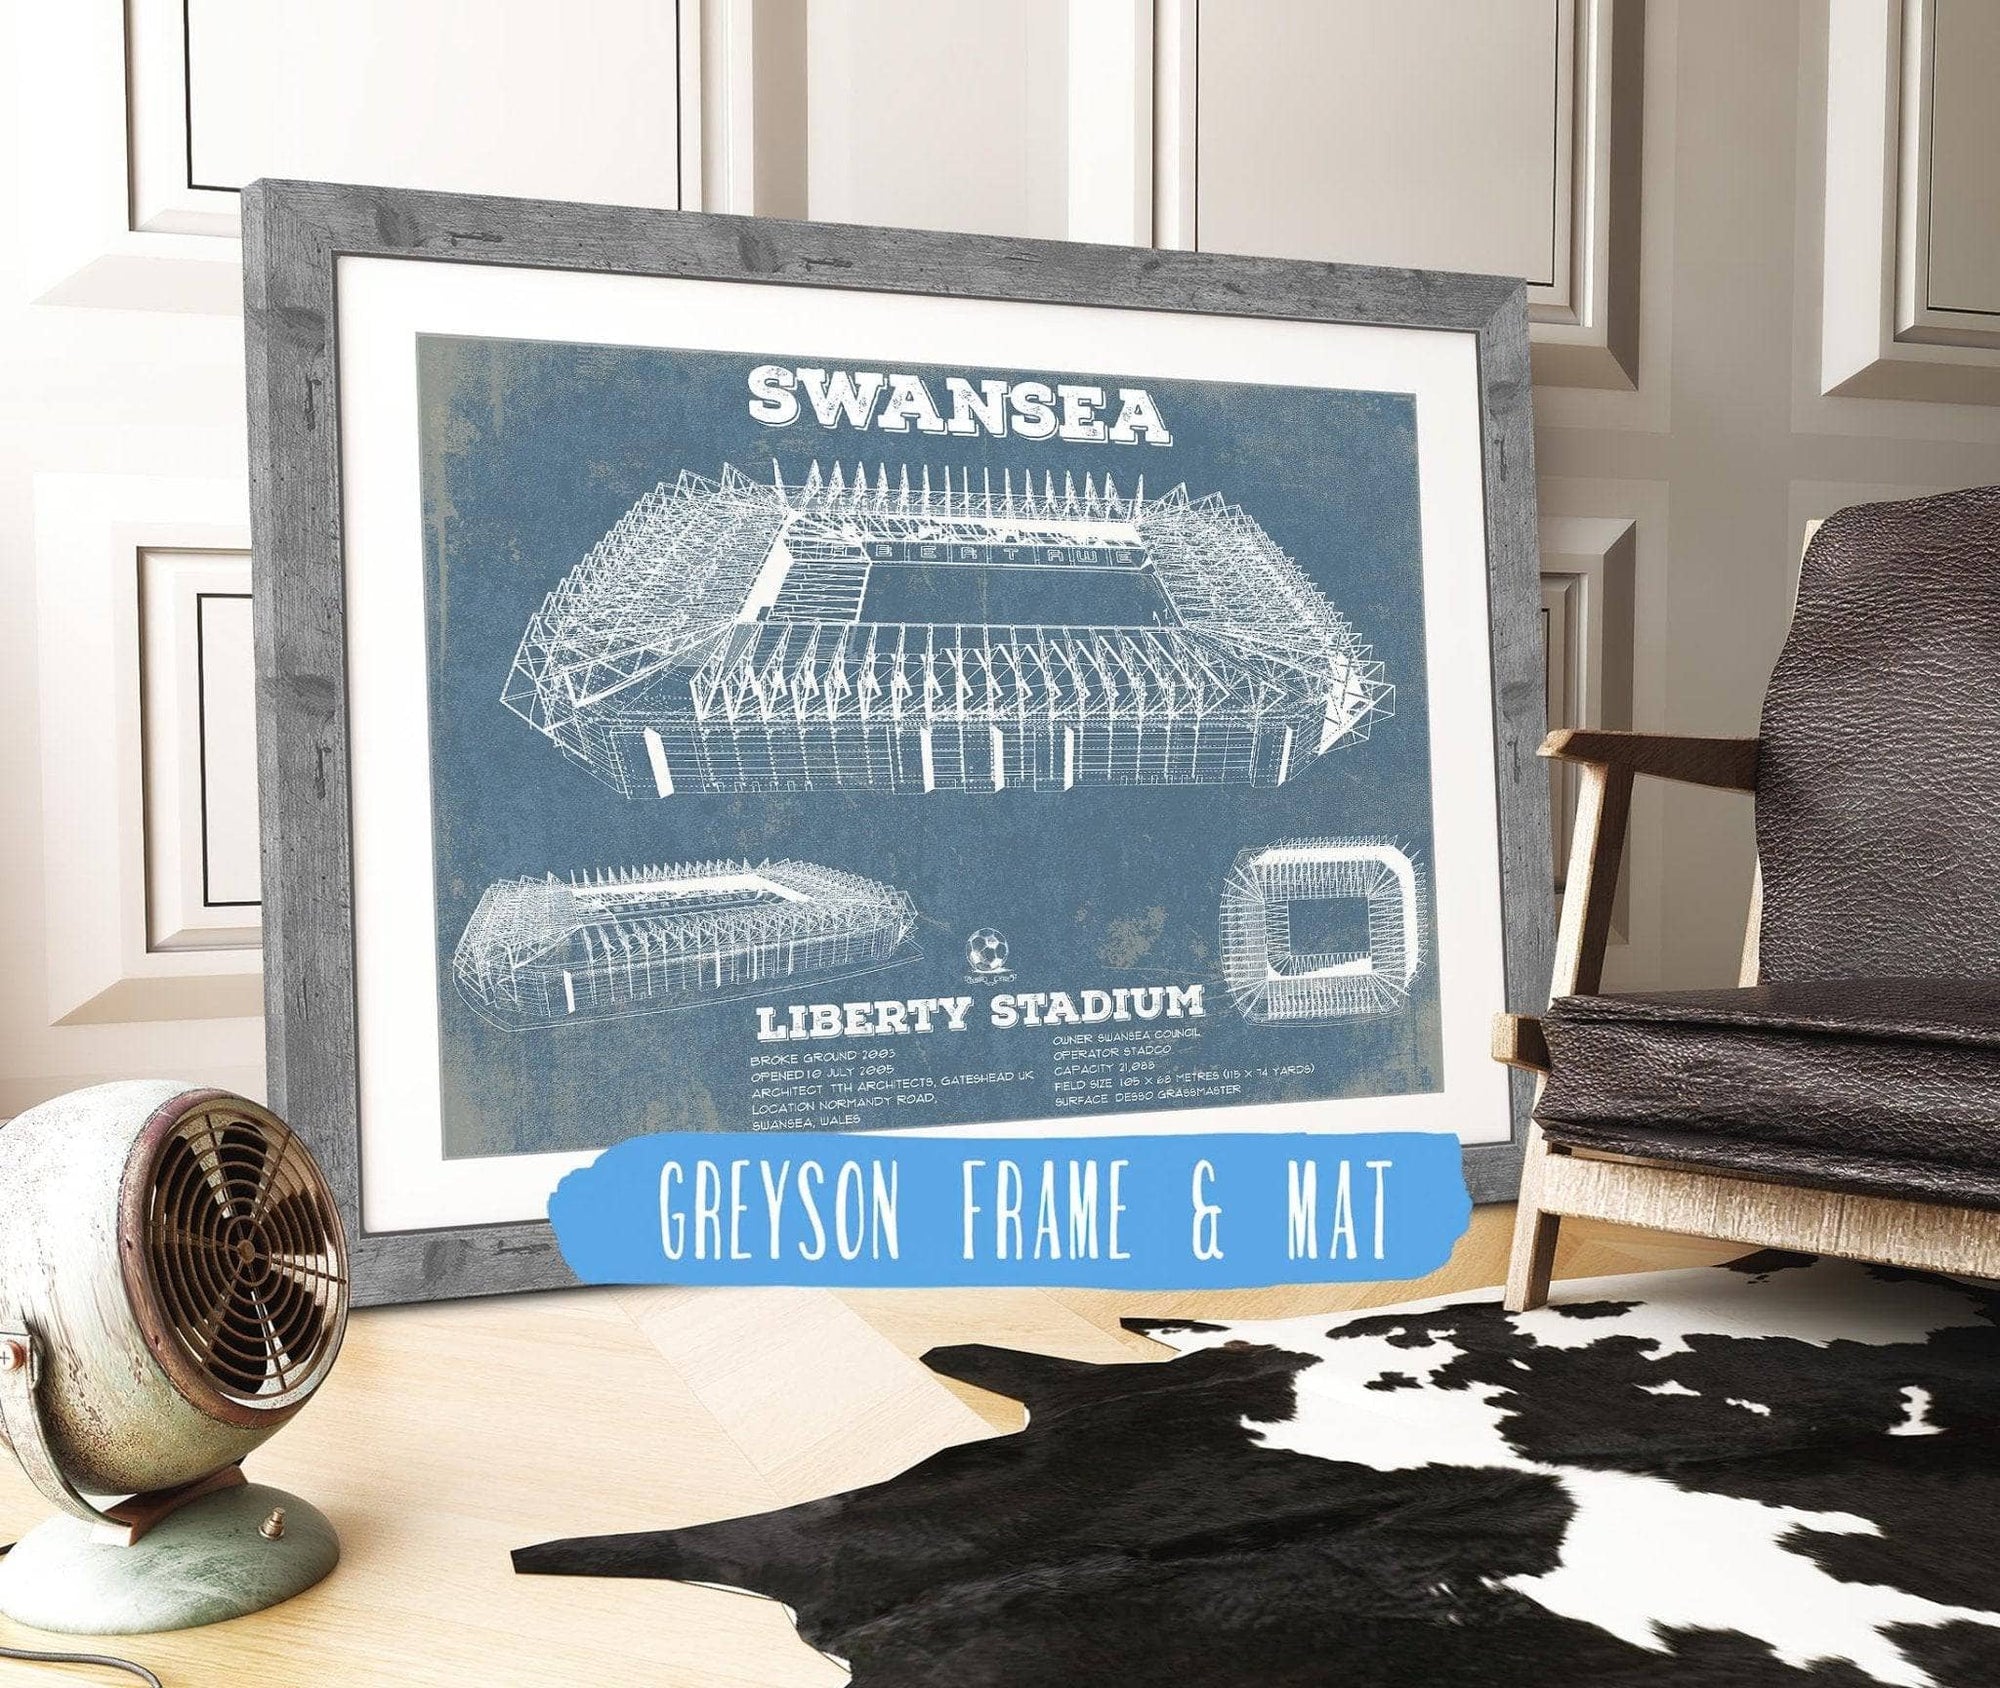 Cutler West Soccer Collection 14" x 11" / Greyson Frame & Mat Swansea City Football Club- Liberty Stadium Soccer Print 730702222_74855